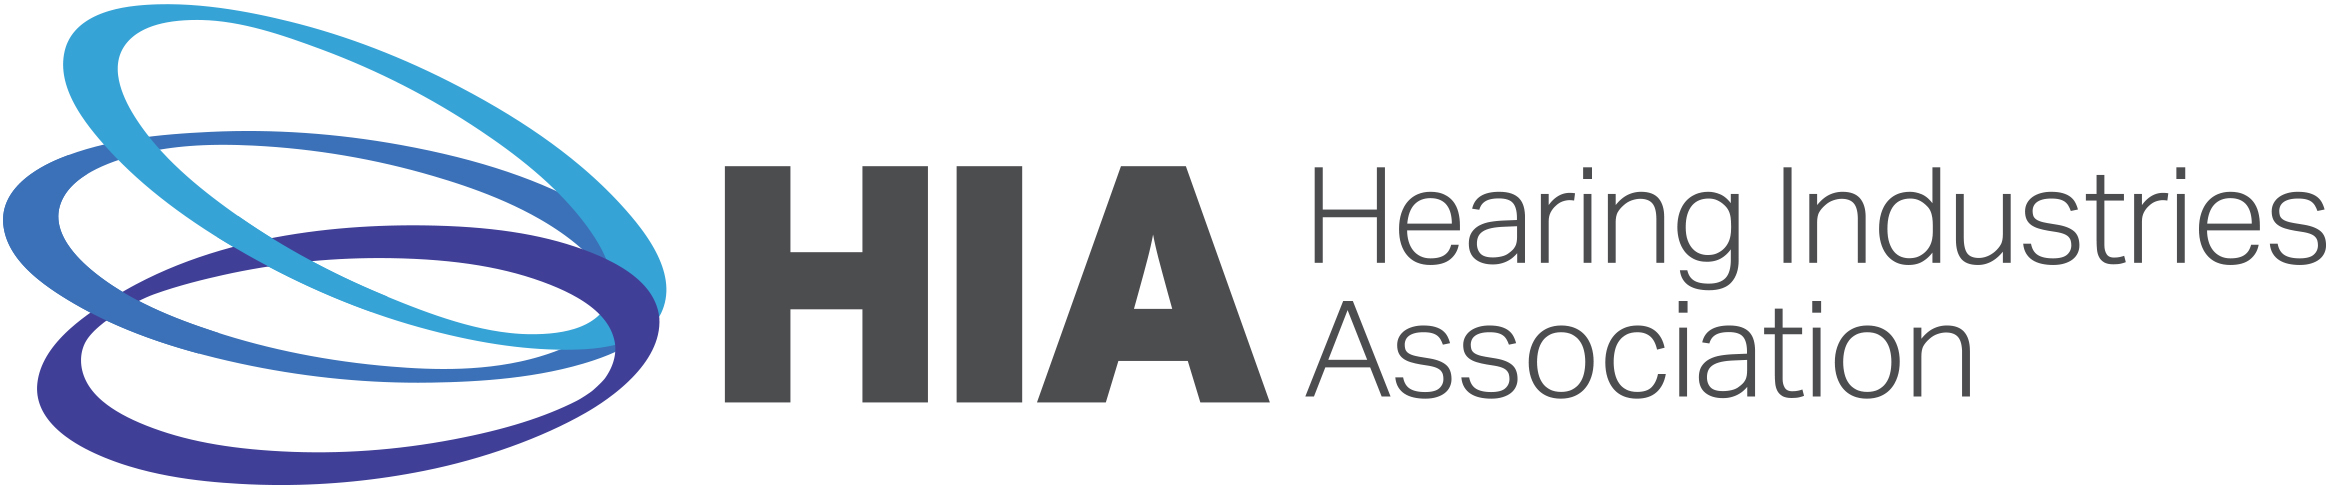 Hearing Industries Association logo